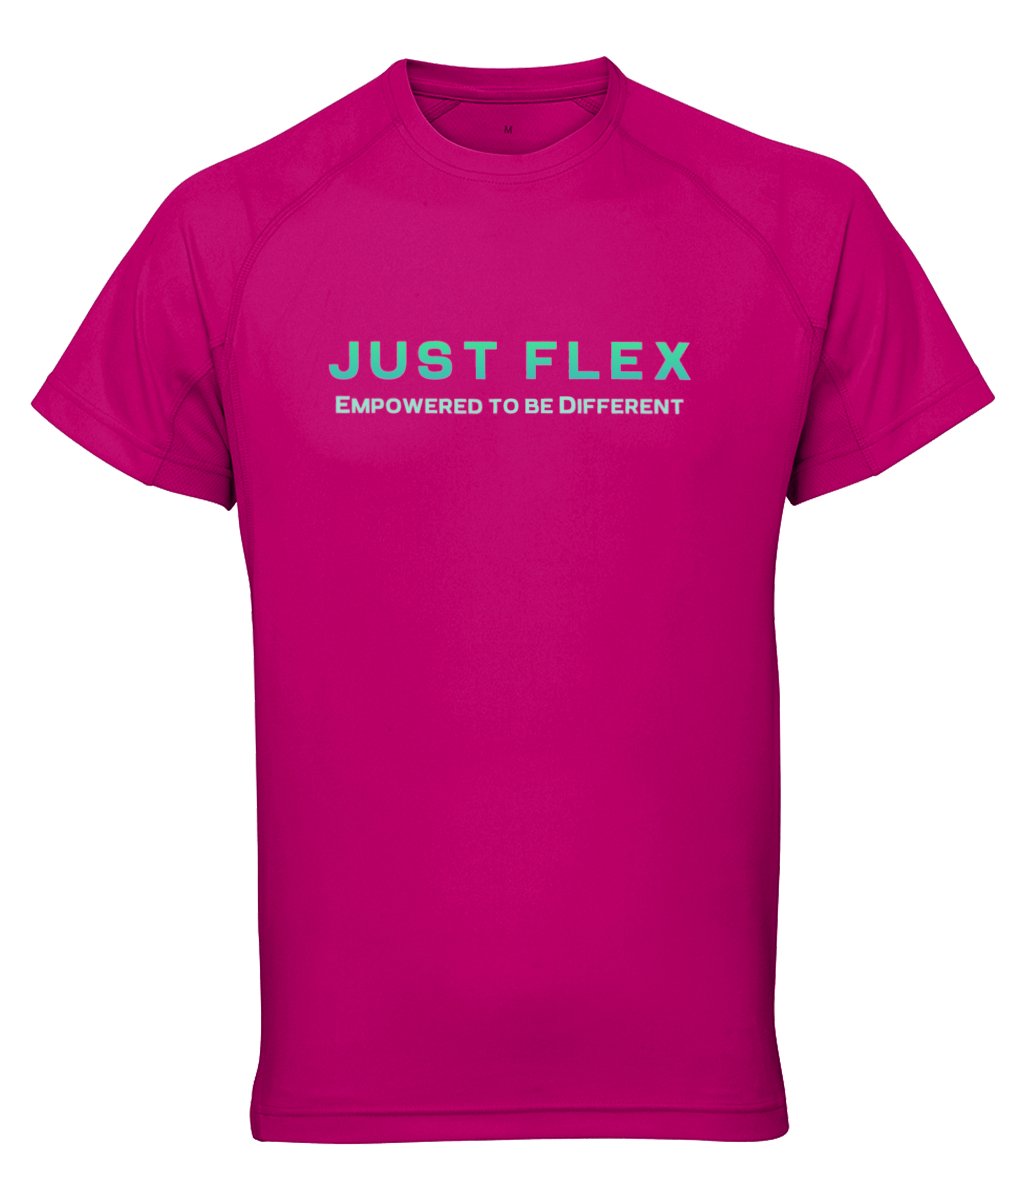 Just Flex - Empowered To Be Different Women's TriDri® Performance T-Shirt